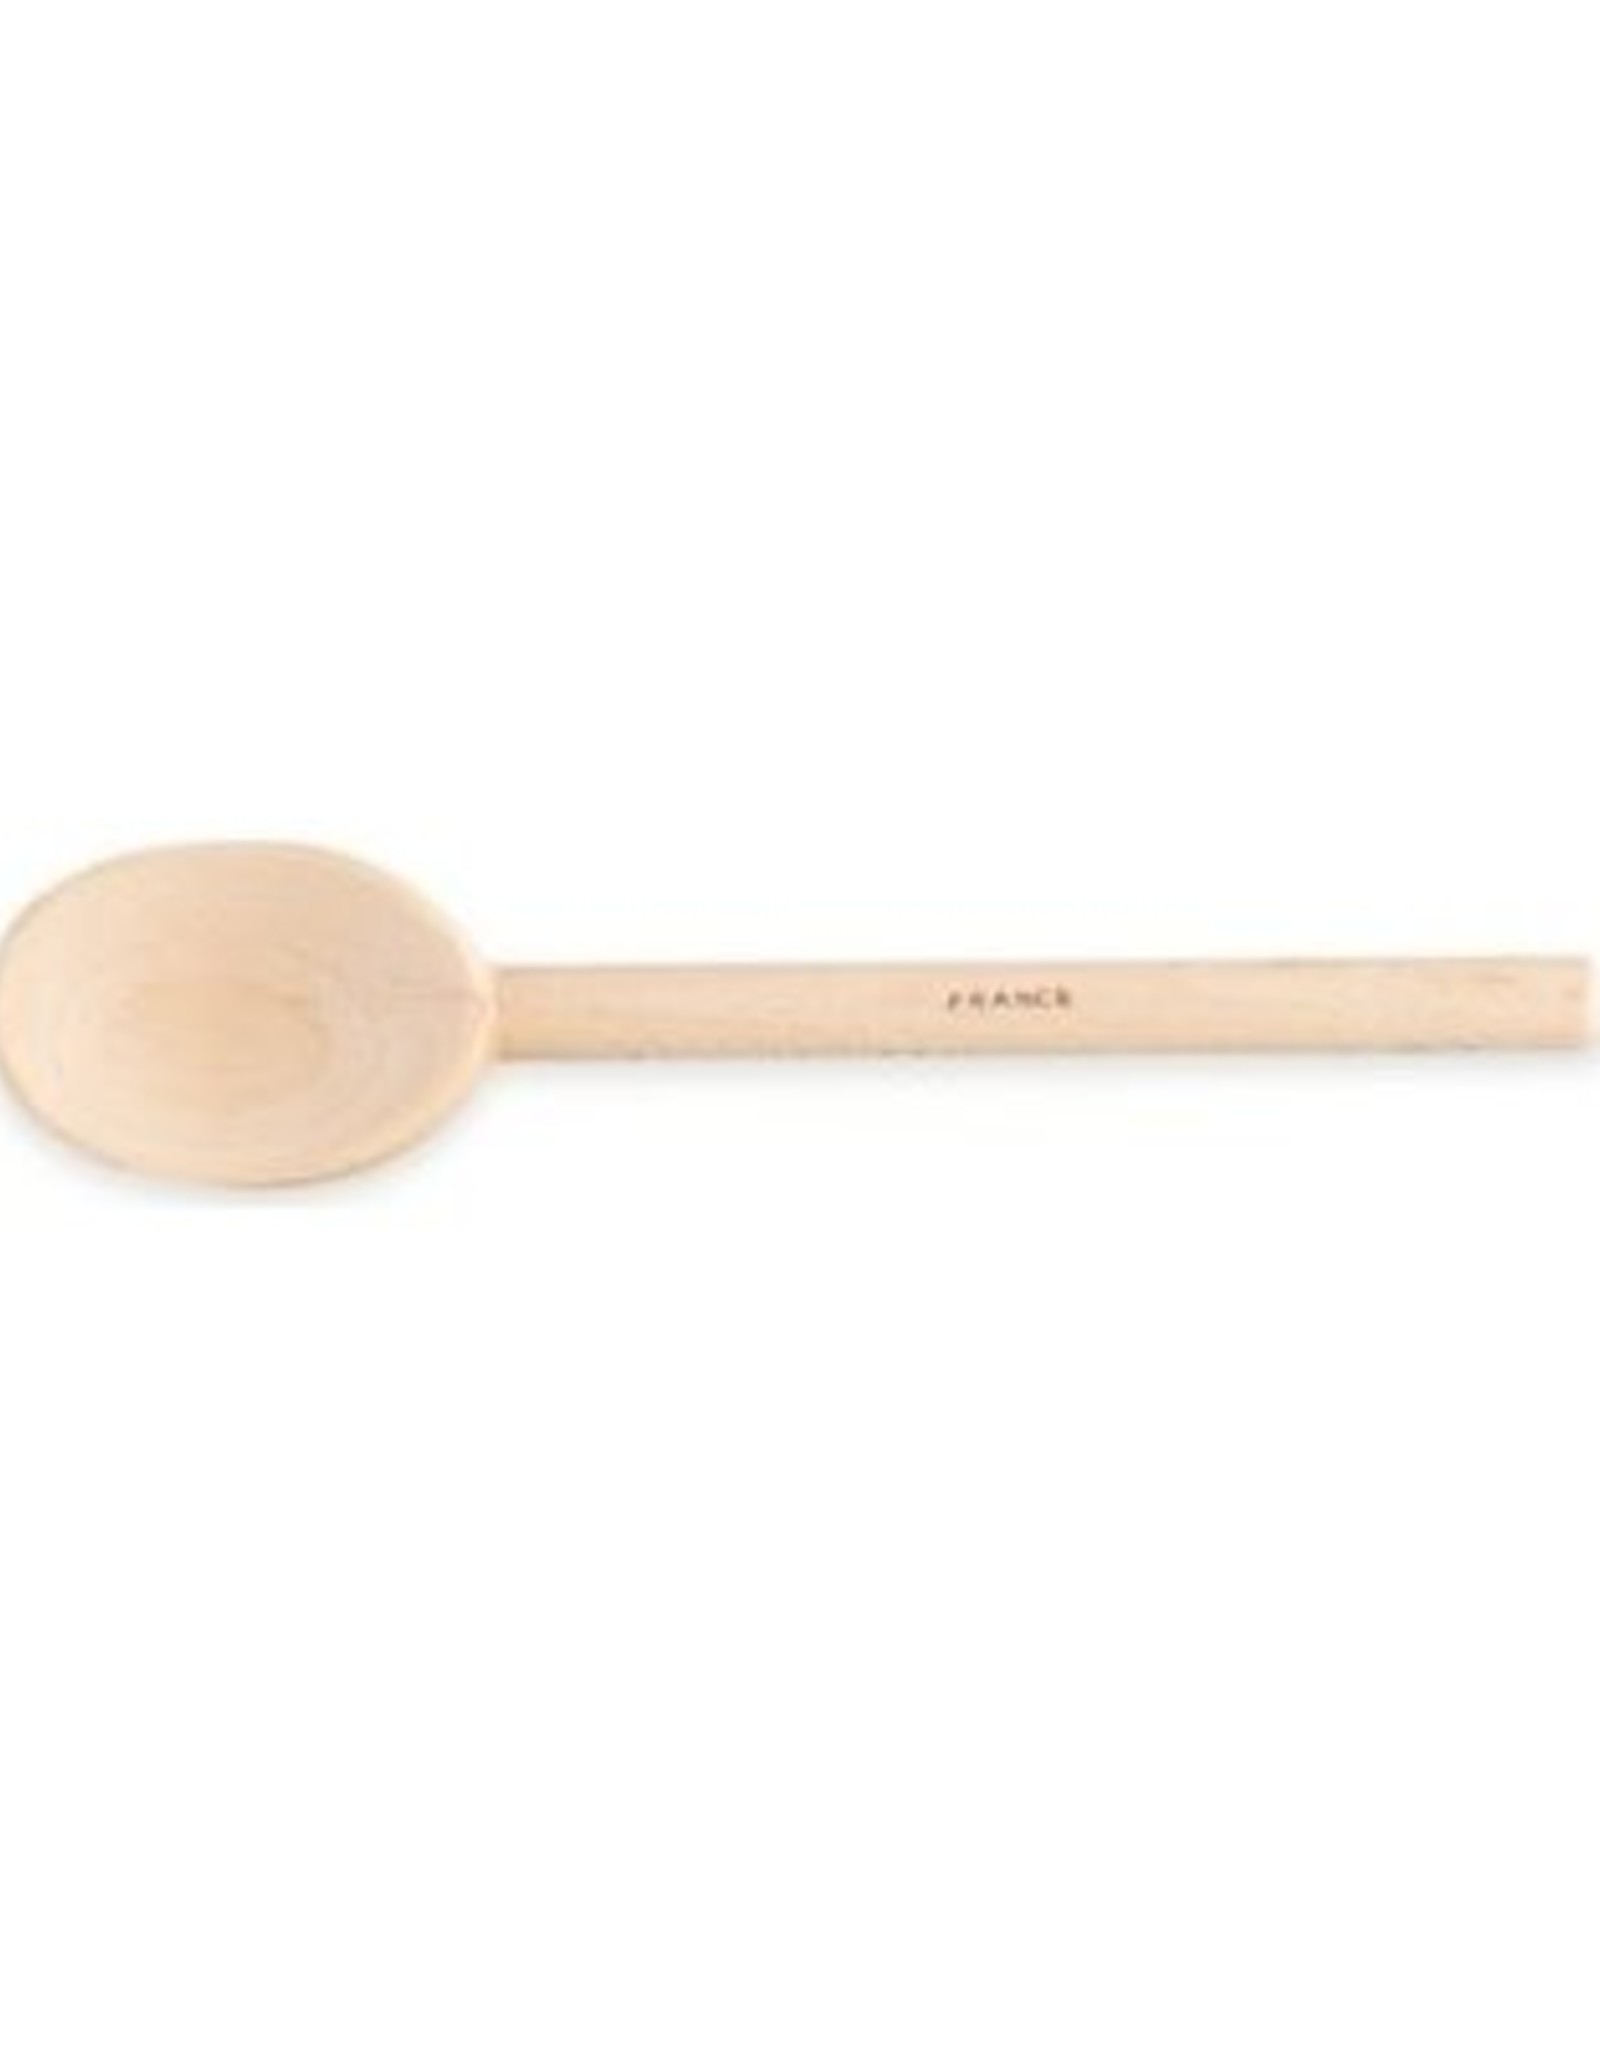 Wooden Spoon (8 inch)